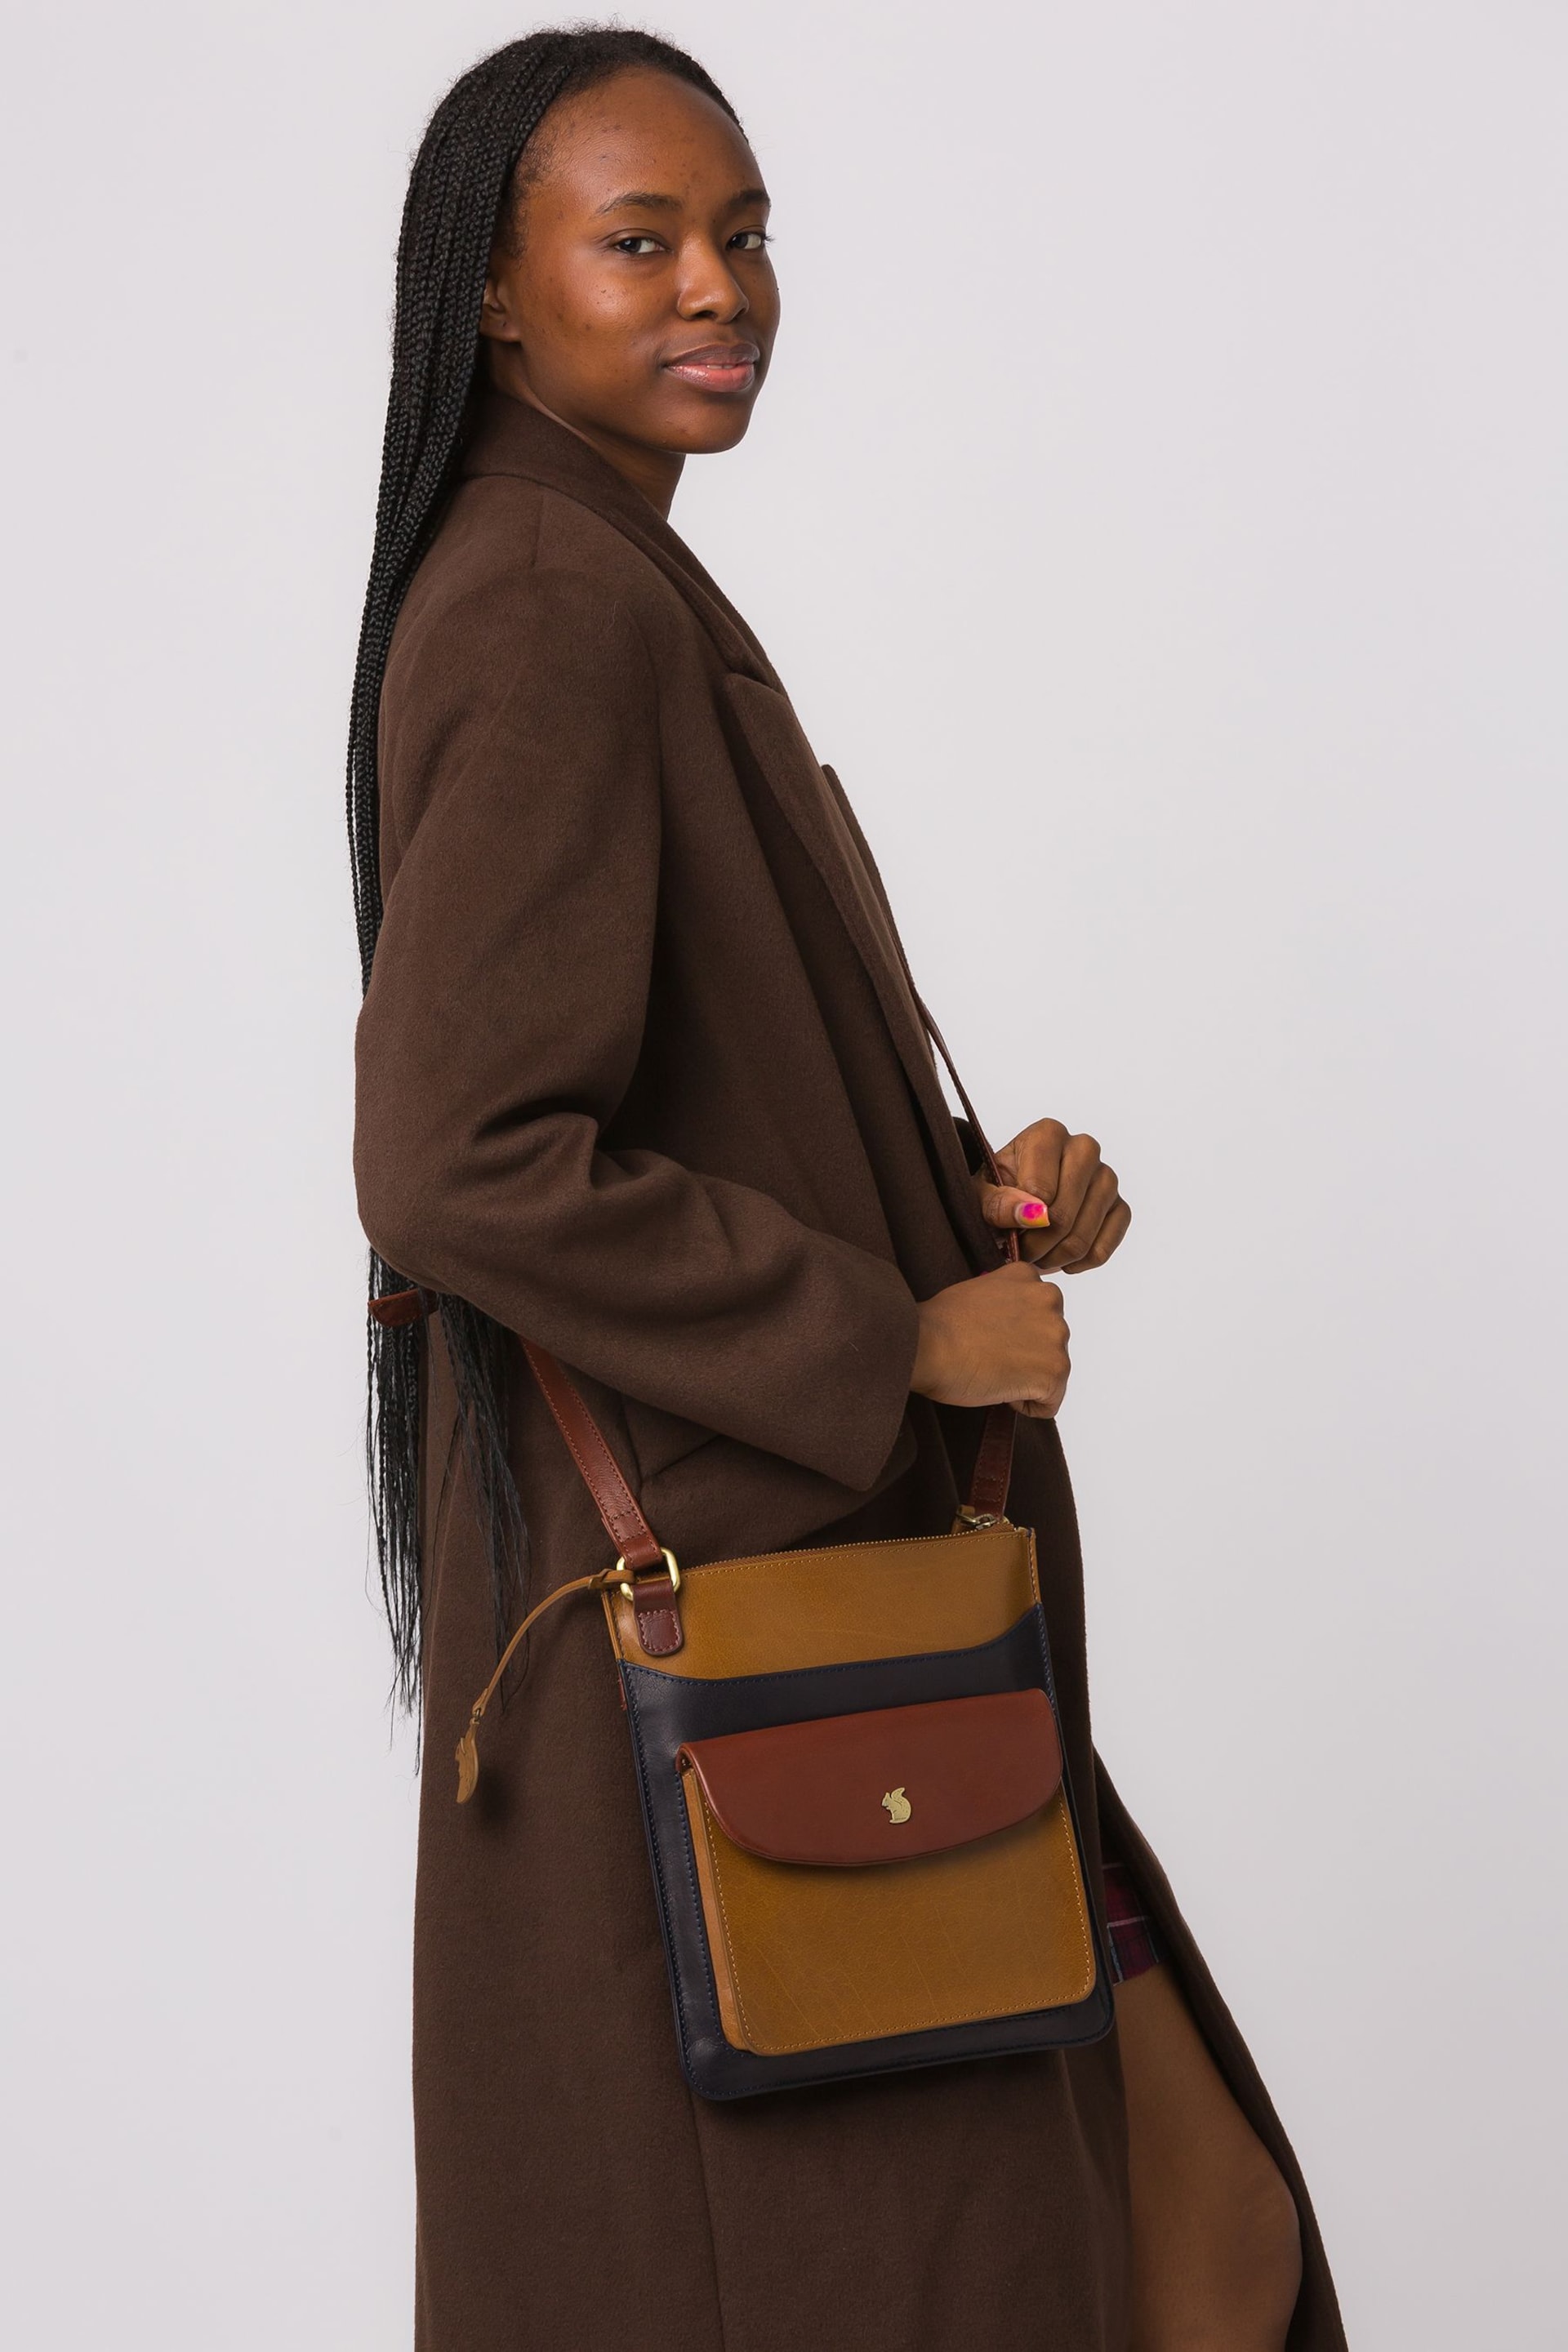 Conkca Lauryn Leather Cross-Body Bag - Image 1 of 6